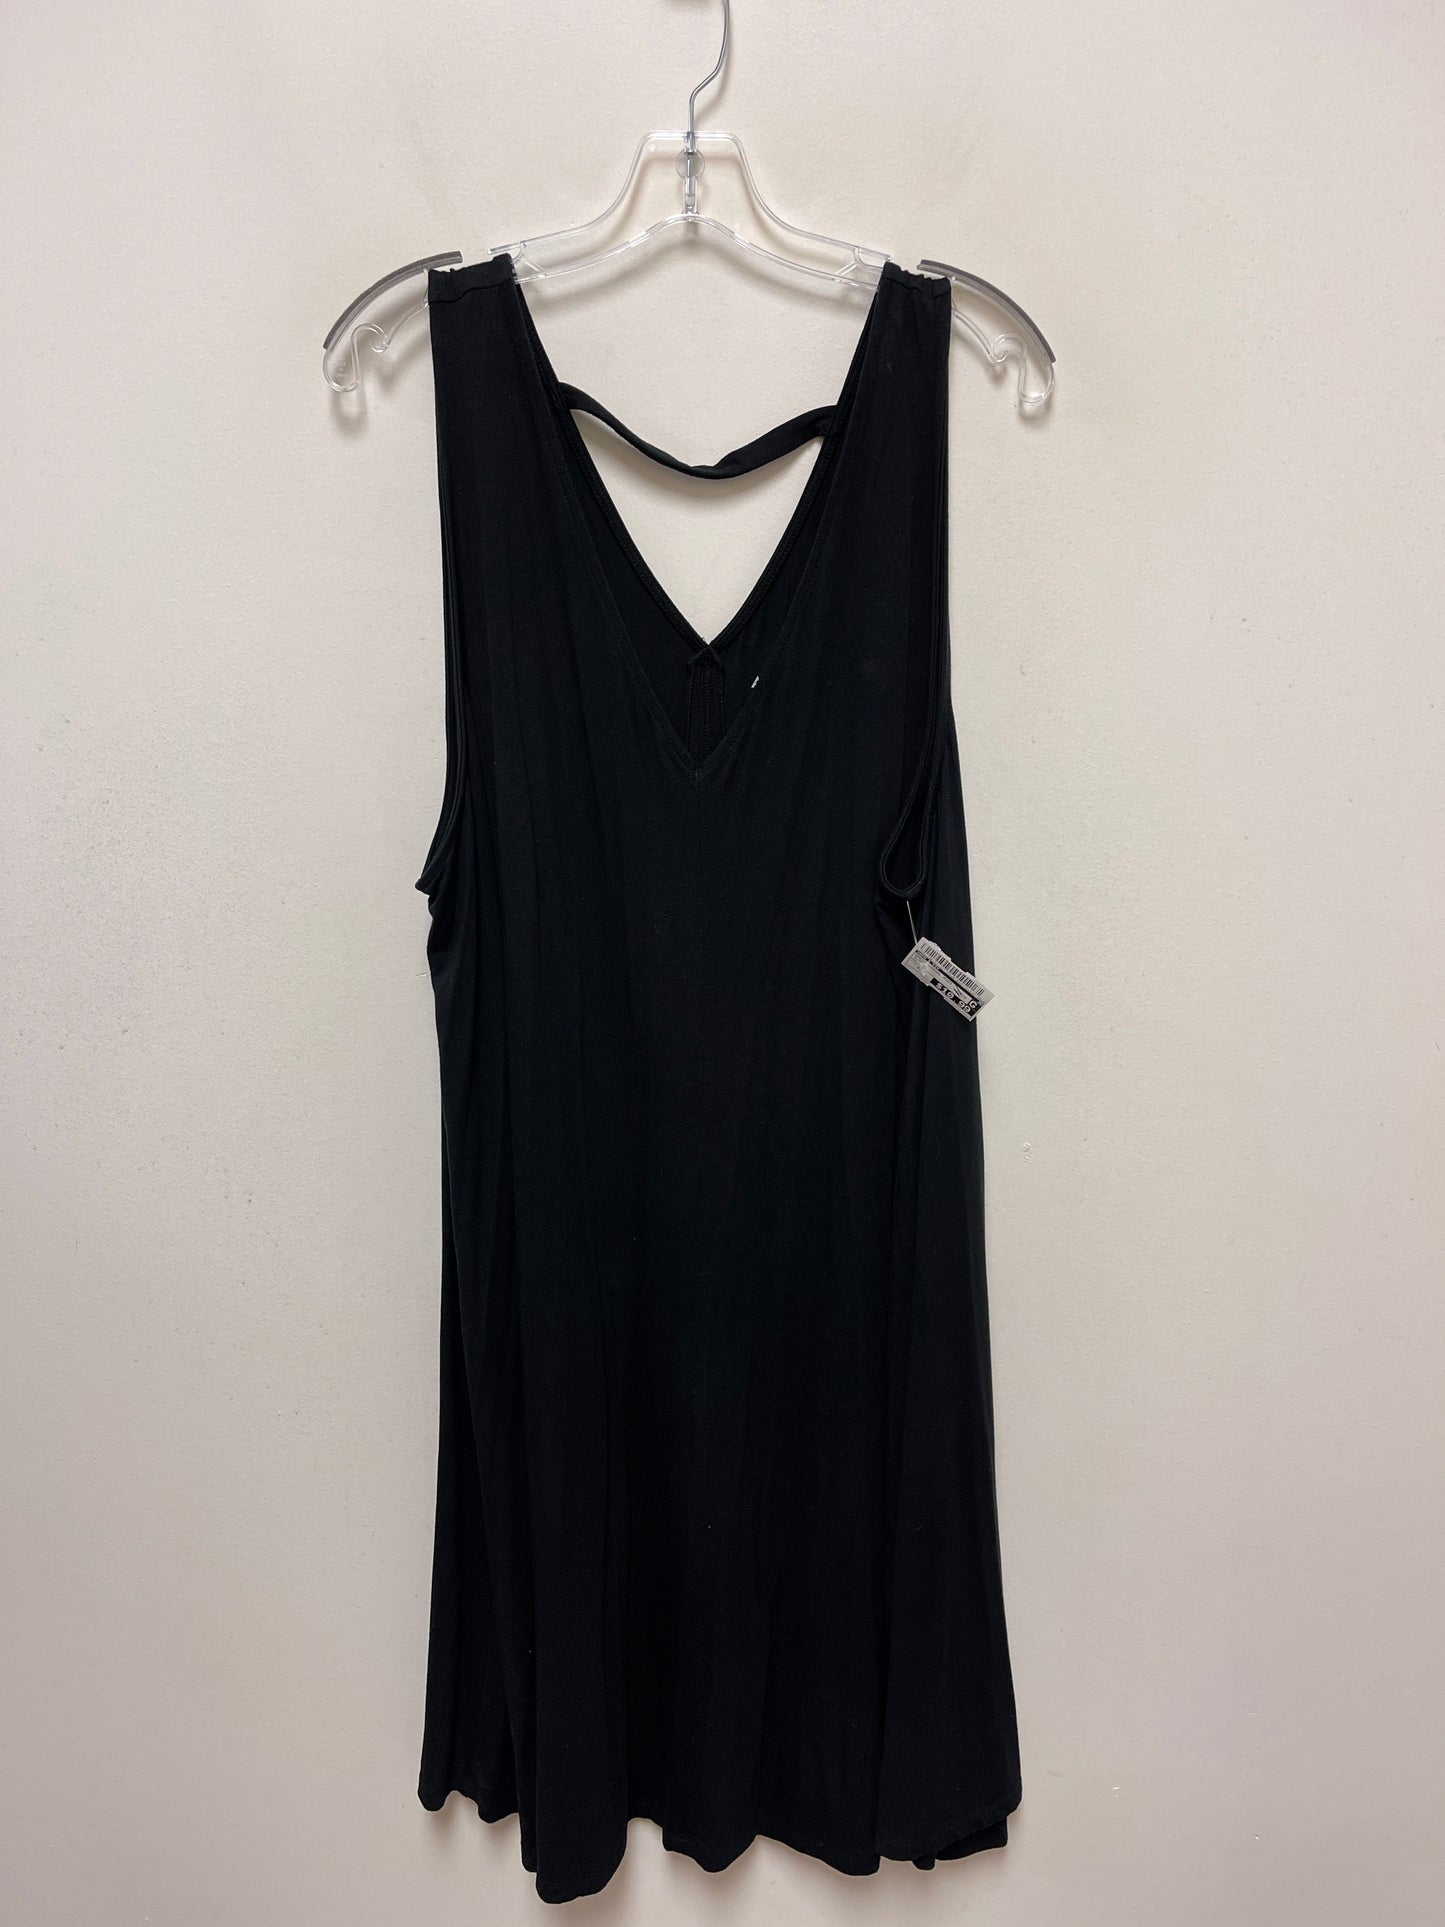 Black Dress Casual Midi Ava & Viv, Size 3x